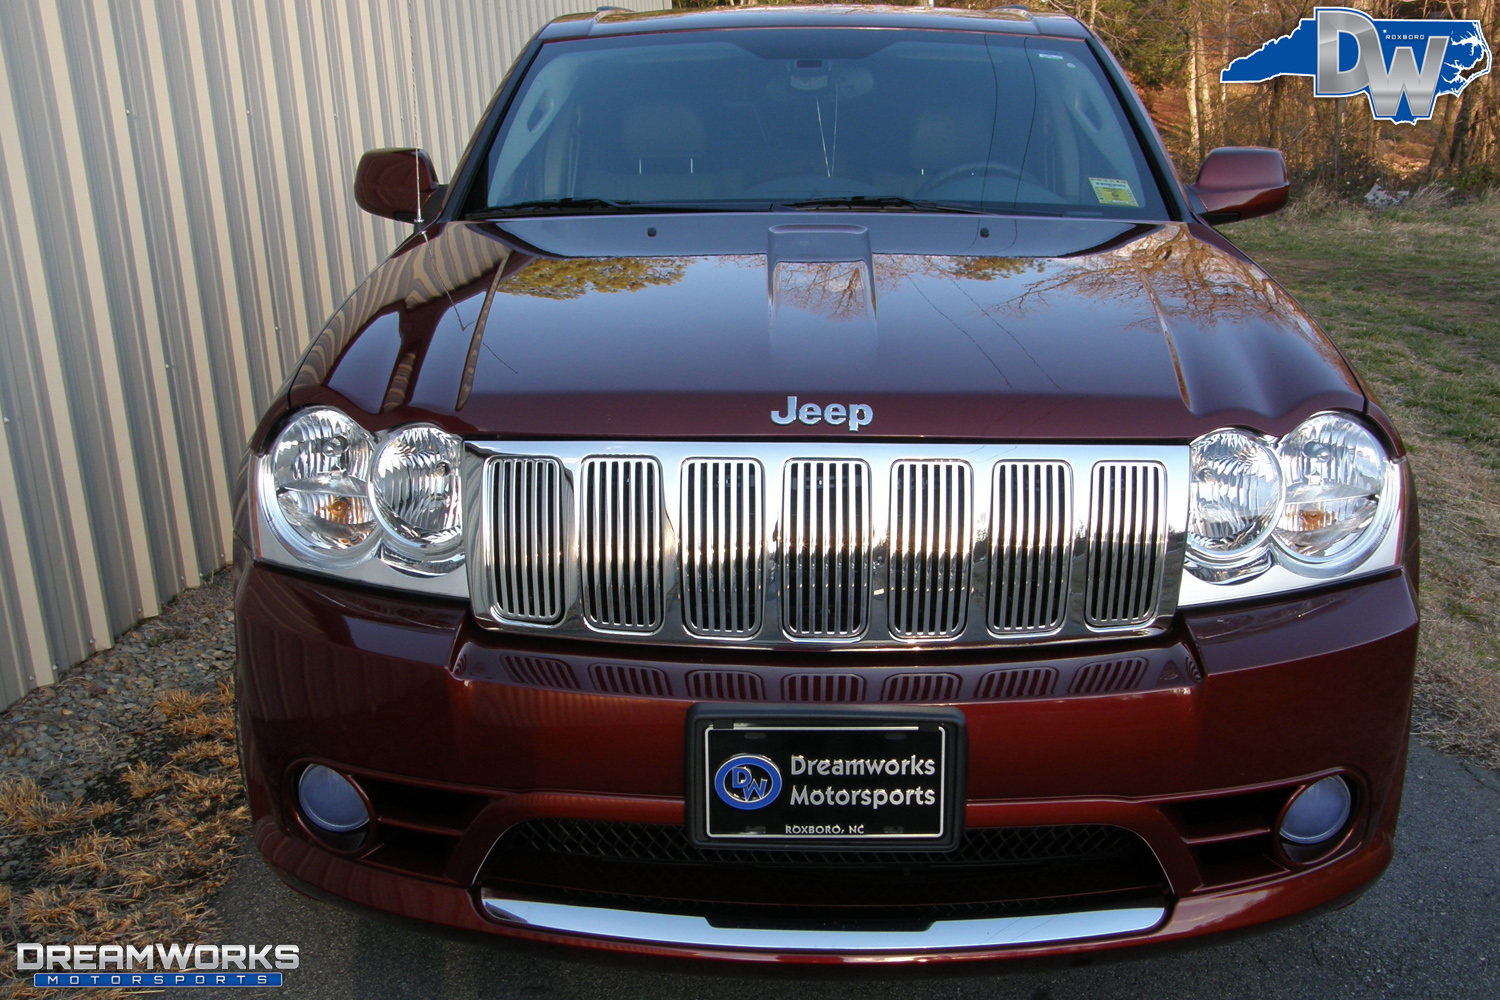 2007-Jeep-Grand-Cherokee-SRT-8-Dreamworks-Motorsports-5.jpg